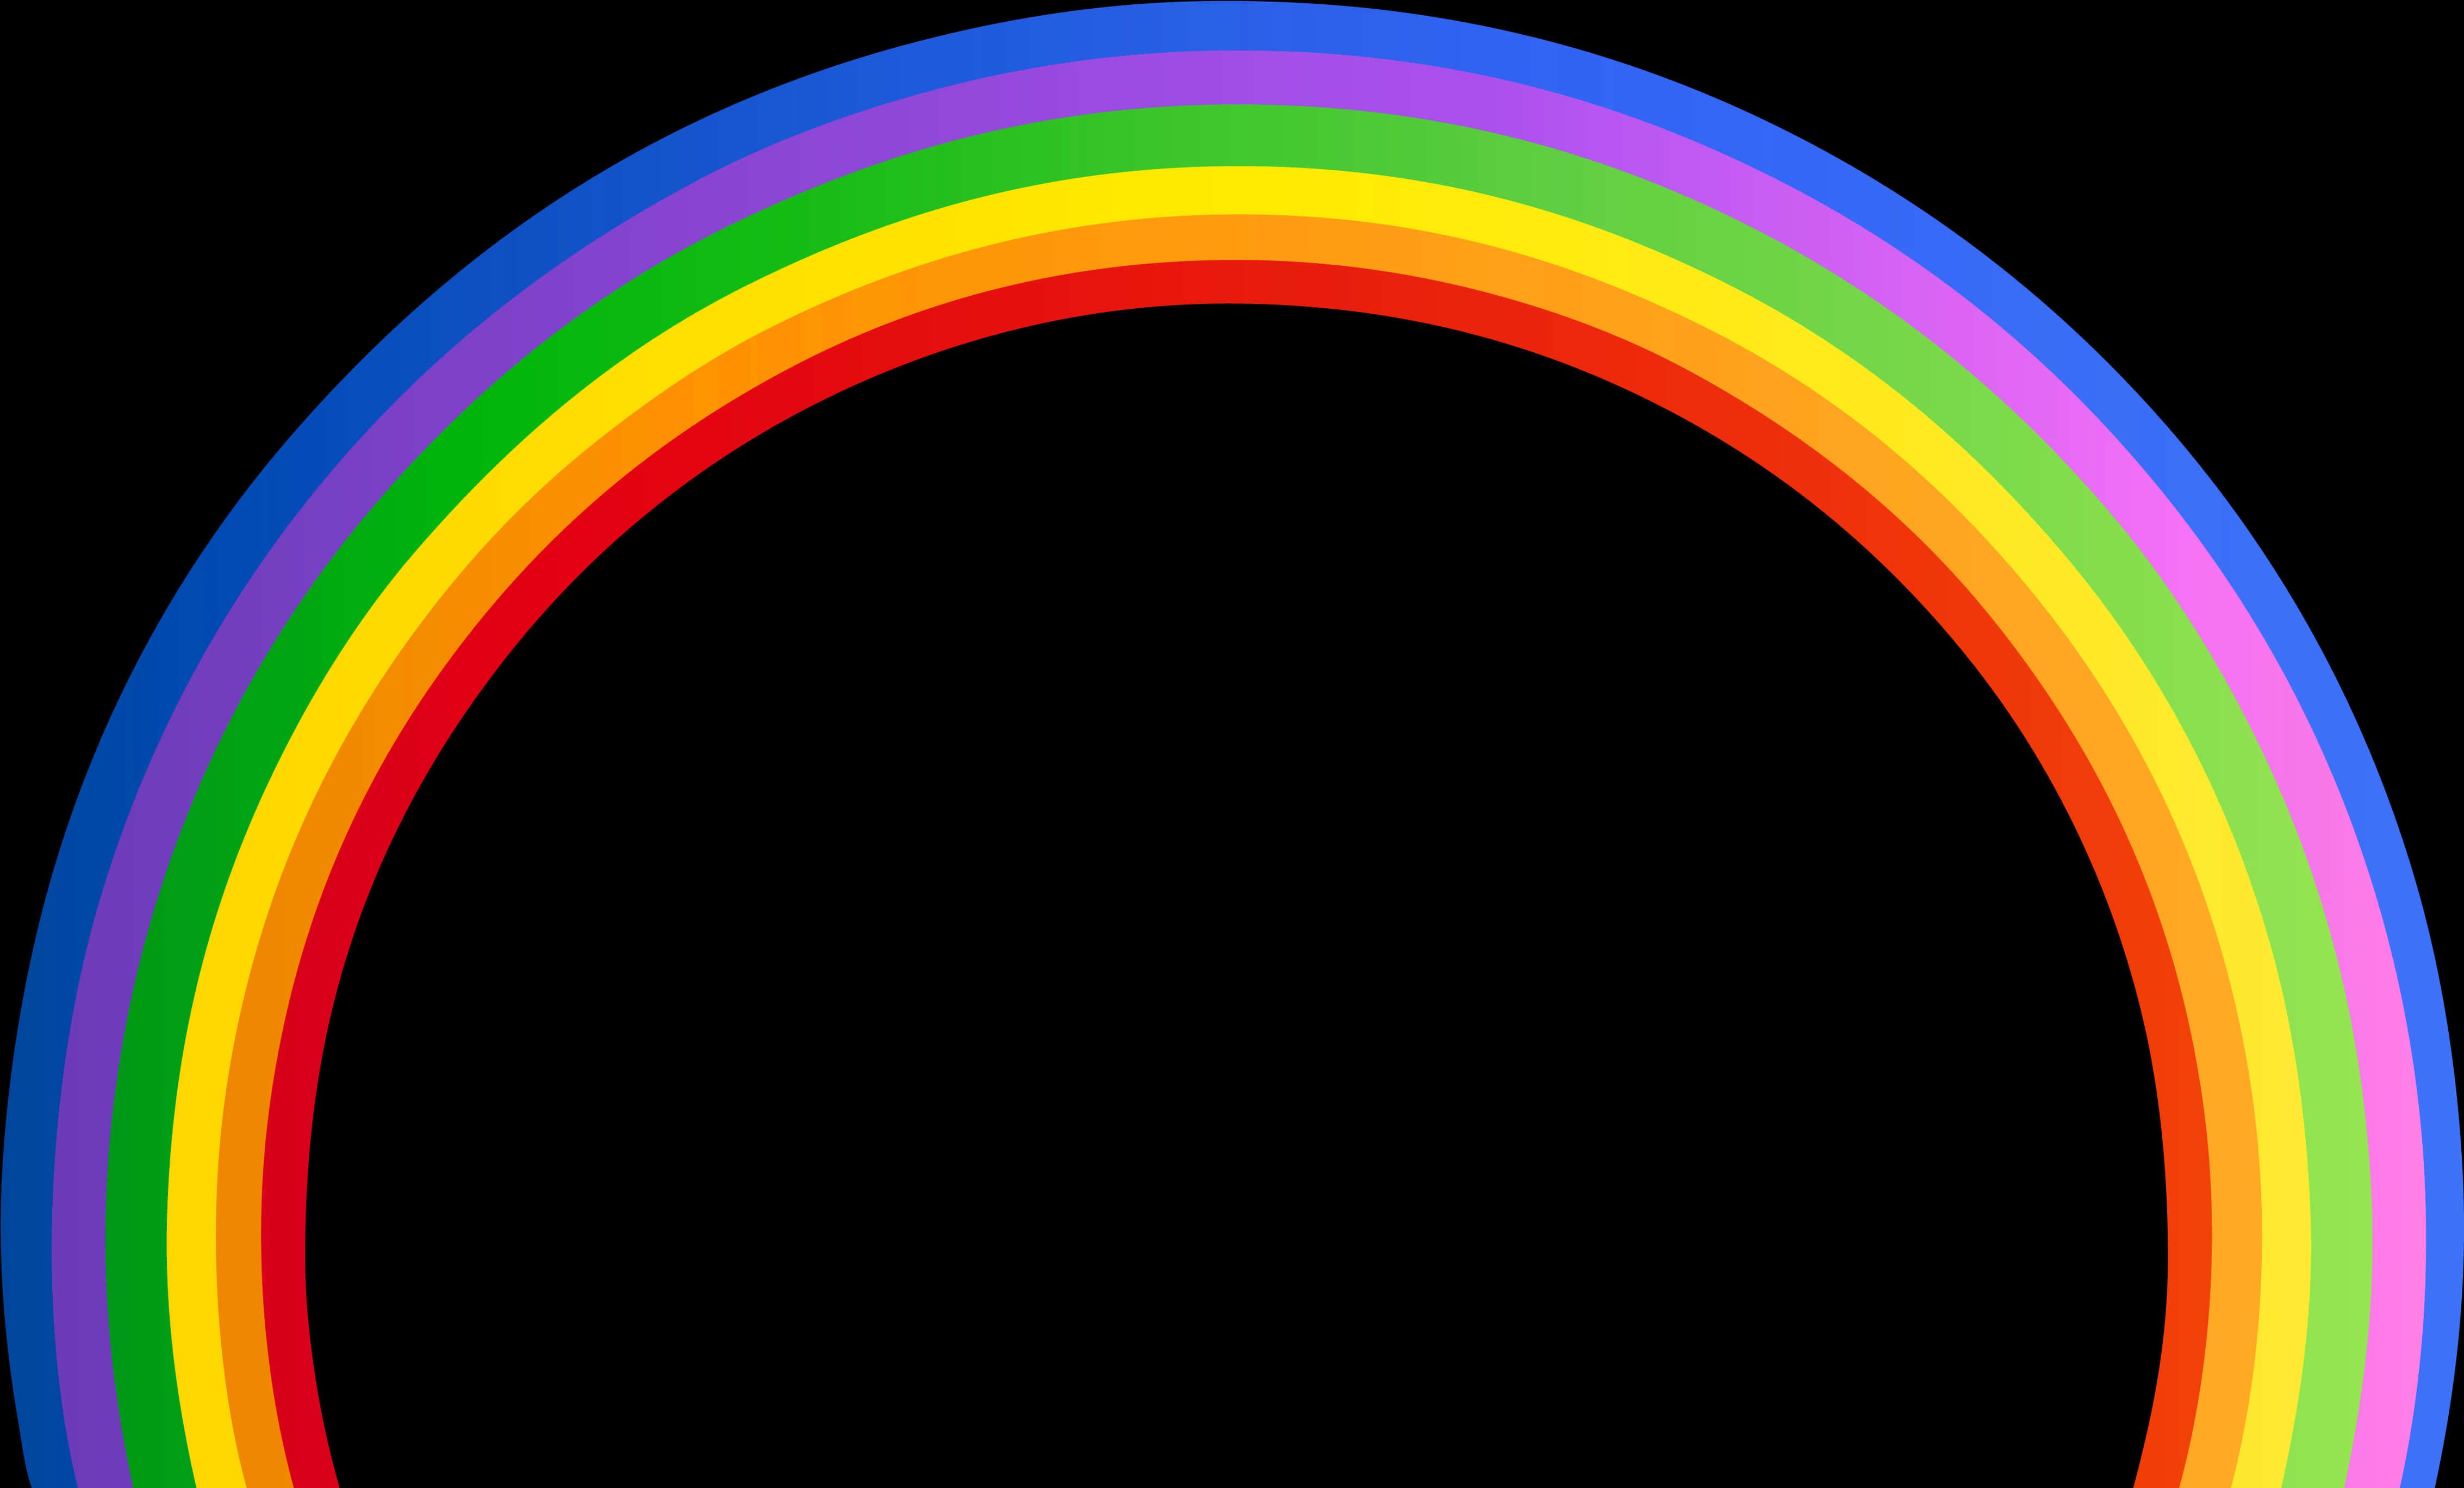 Vibrant Rainbow Arc